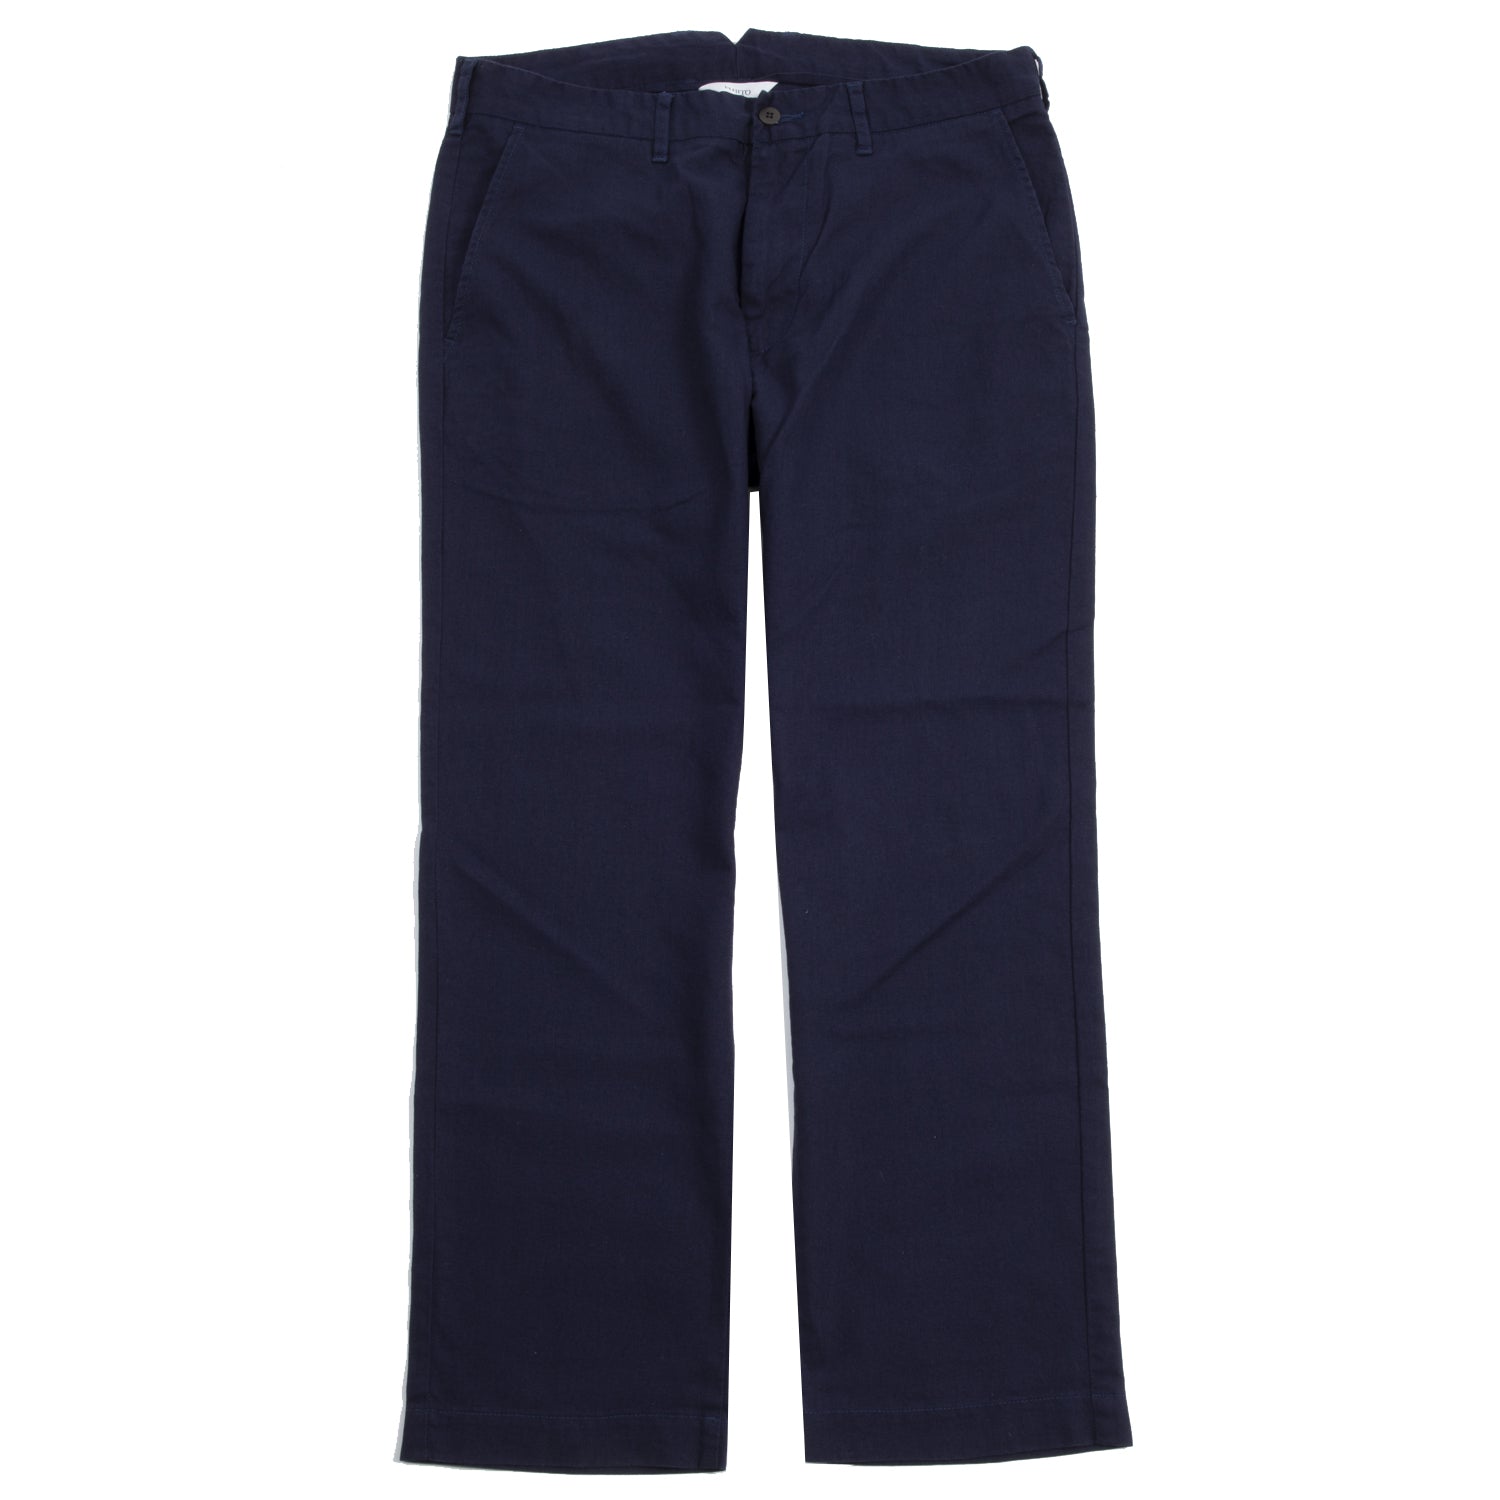 XFLWAM Chino Pants for Men Skinny Stretchy Pants Slim Fit Slacks Tapered  Trousers Button Zipper Casual Pencil Pants Navy Blue L - Walmart.com